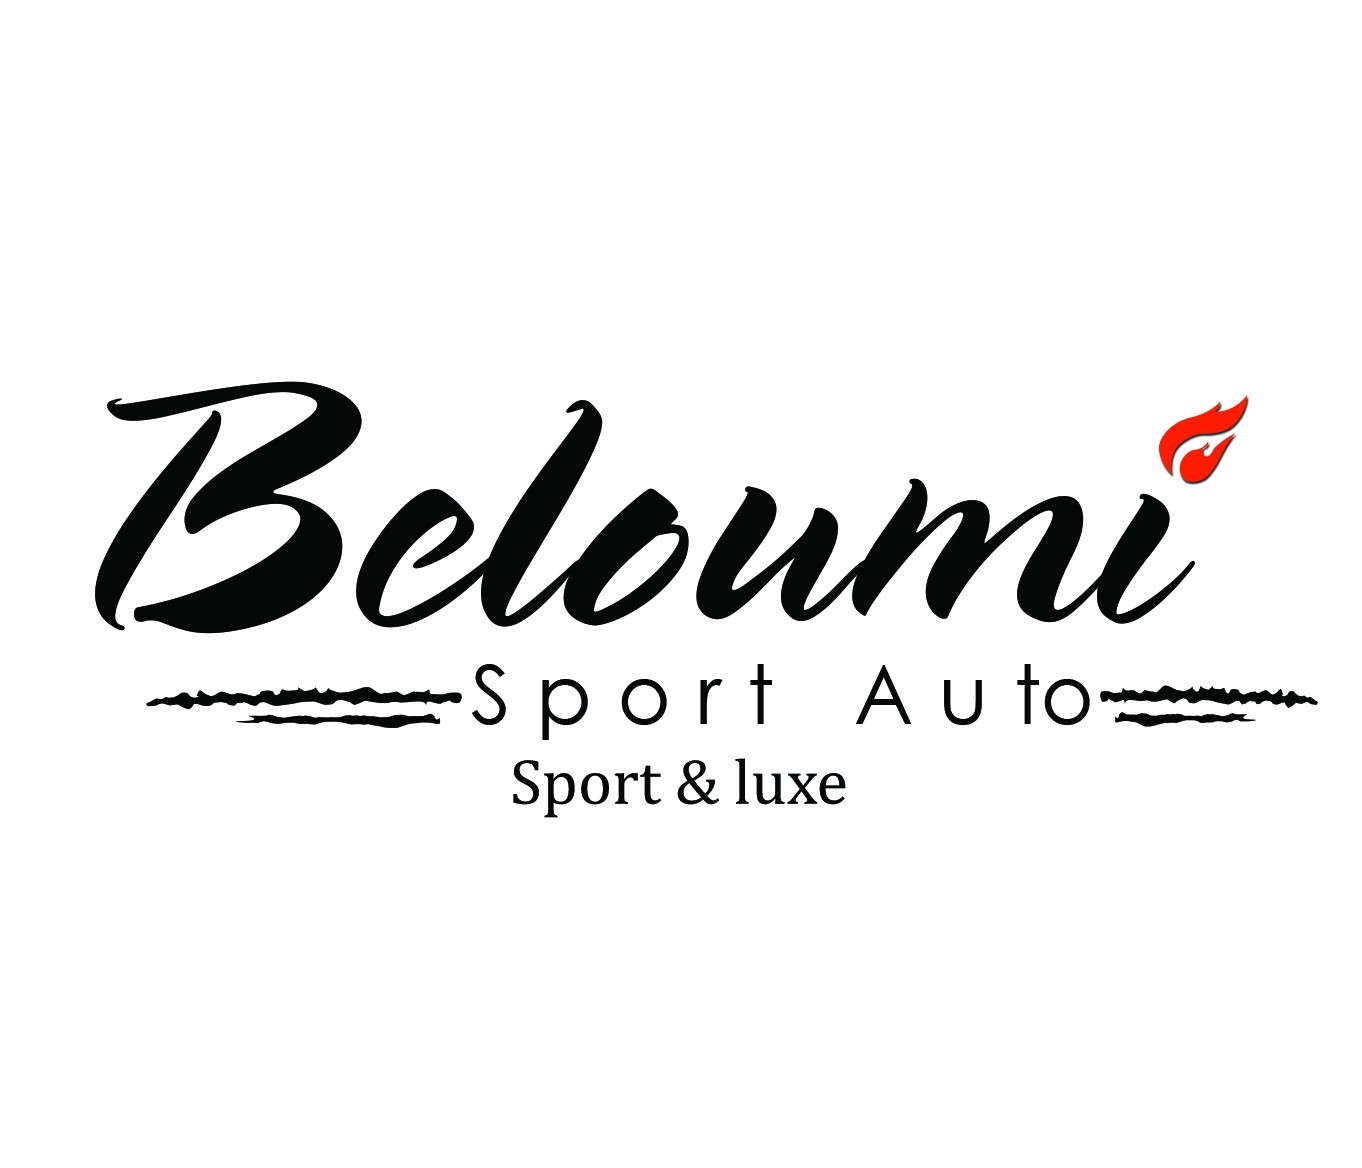 Beloumi Sport Auto